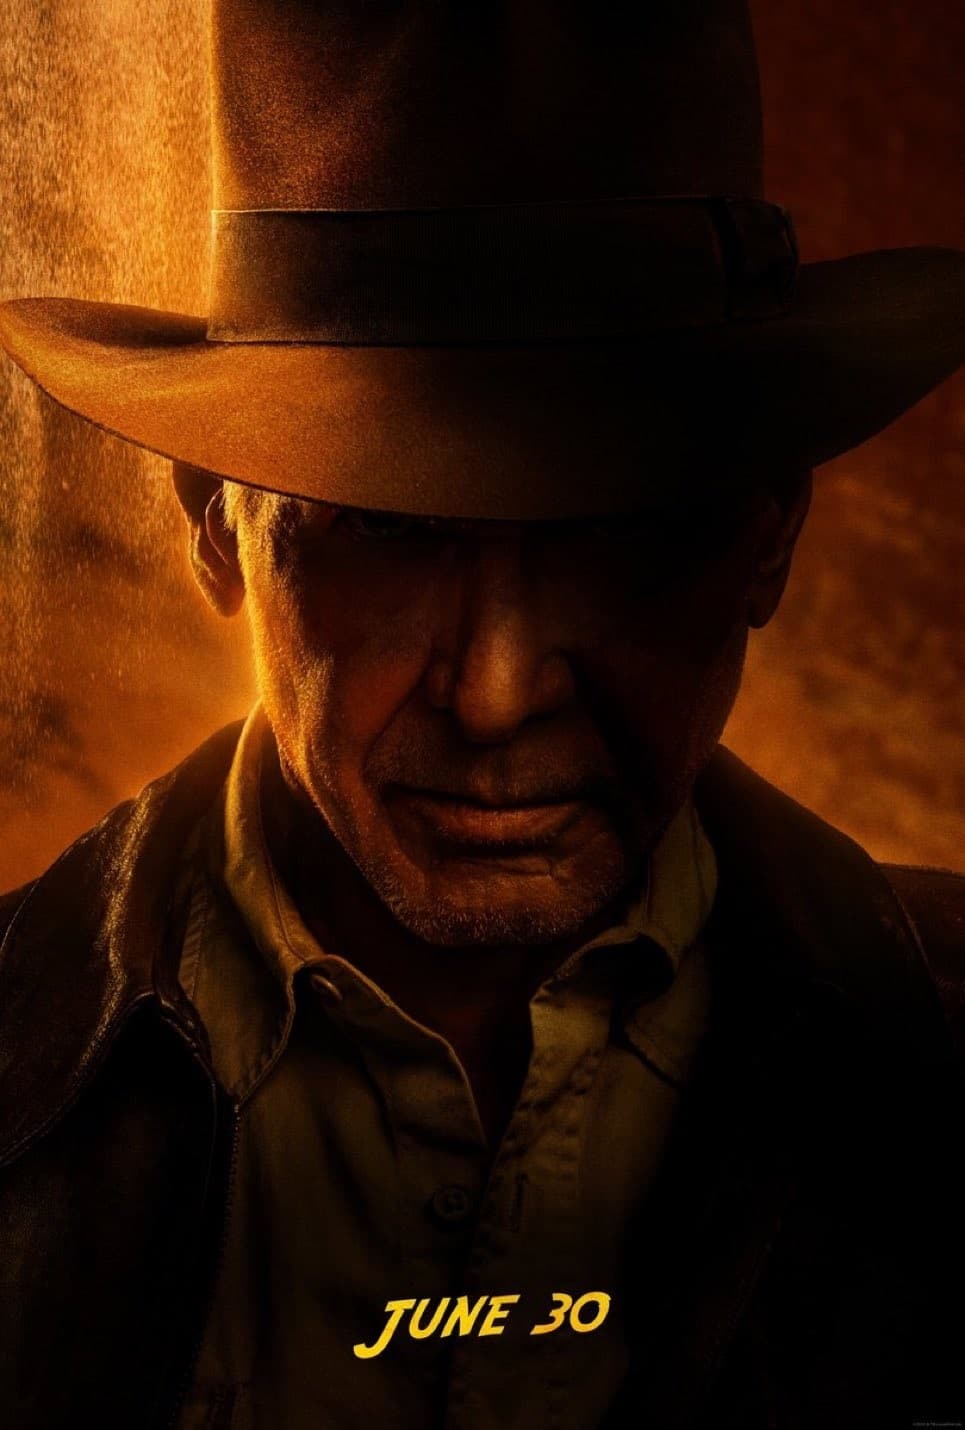 Indiana-Jones-5-Poster Indiana Jones 5 ganha título e trailer com Harrison Ford rejuvenescido